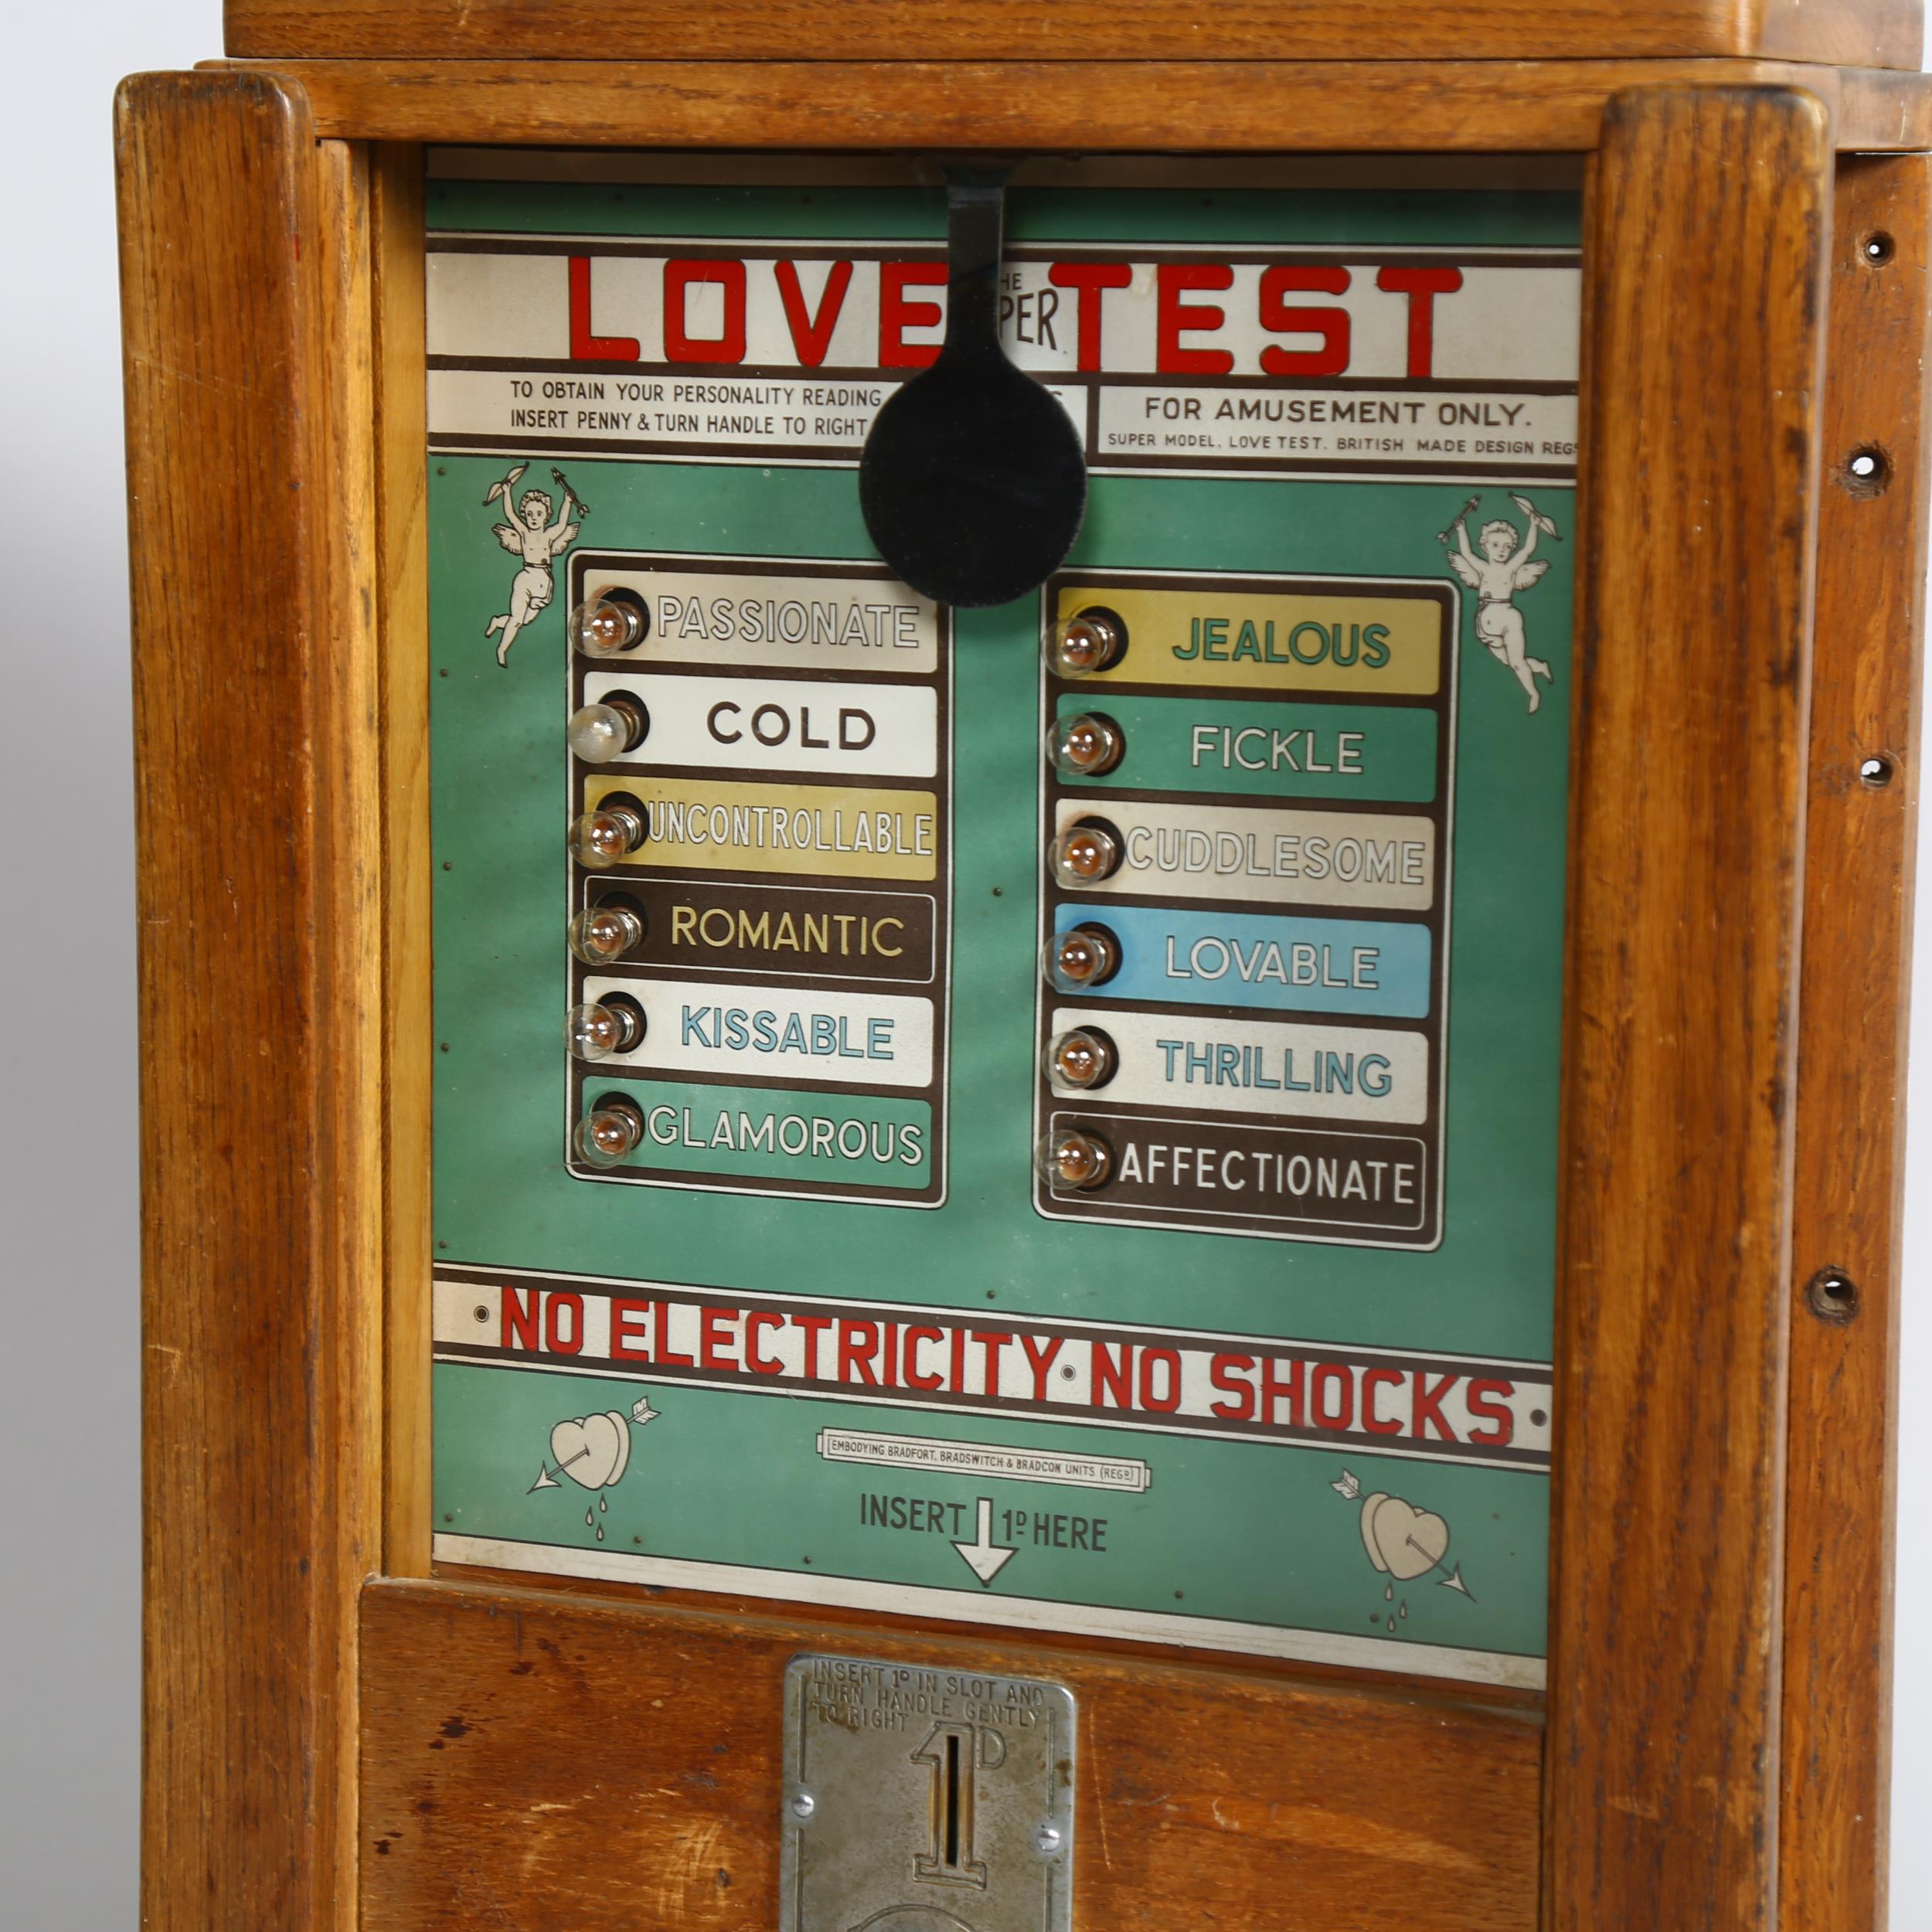 Super Love Test by Bradfort, Bradswitch, Bradcon, wall amusement arcade machine with light-up panel, - Bild 2 aus 4